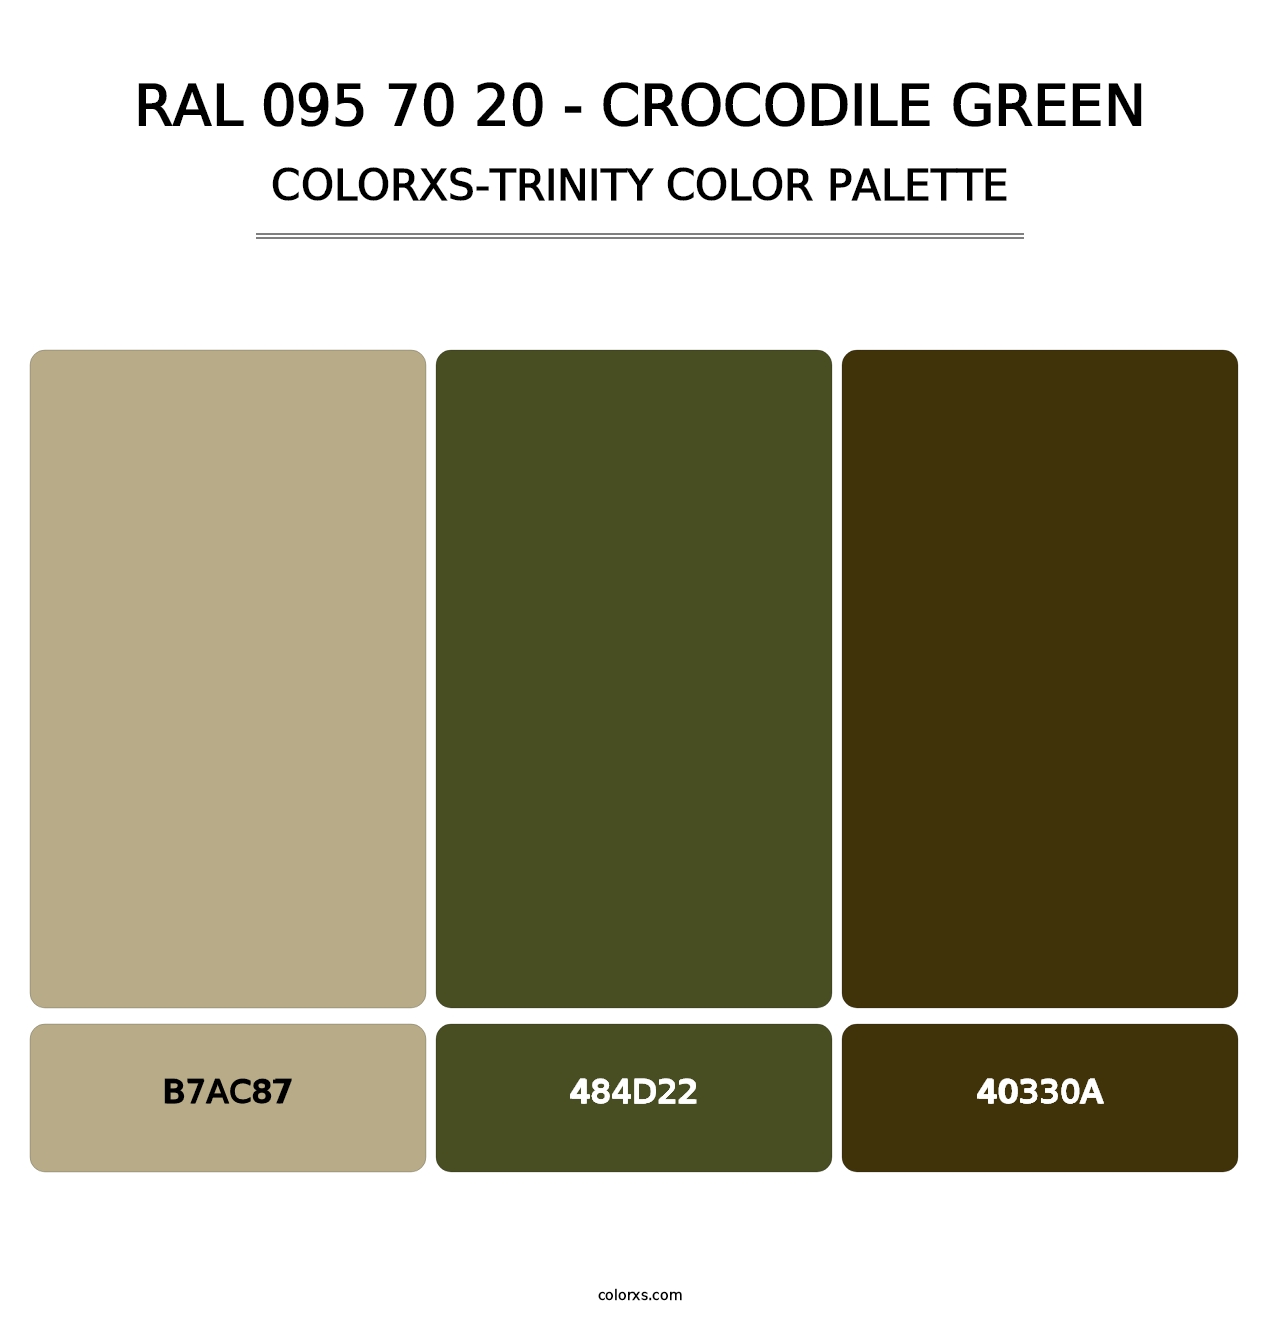 RAL 095 70 20 - Crocodile Green - Colorxs Trinity Palette